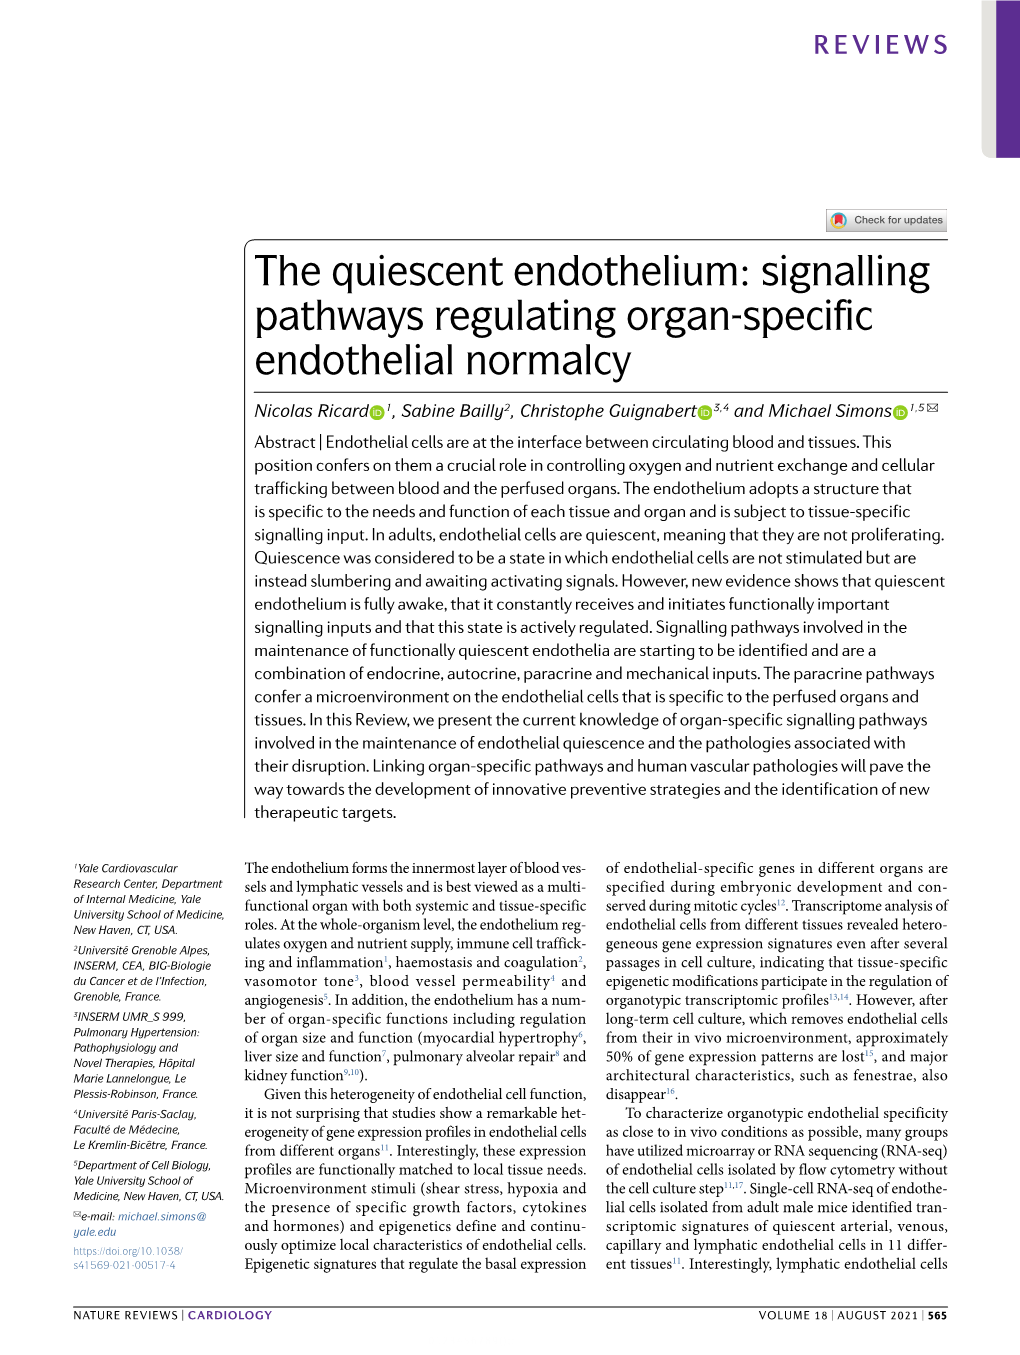 Signalling Pathways Regulating Organ-Specific Endothelial